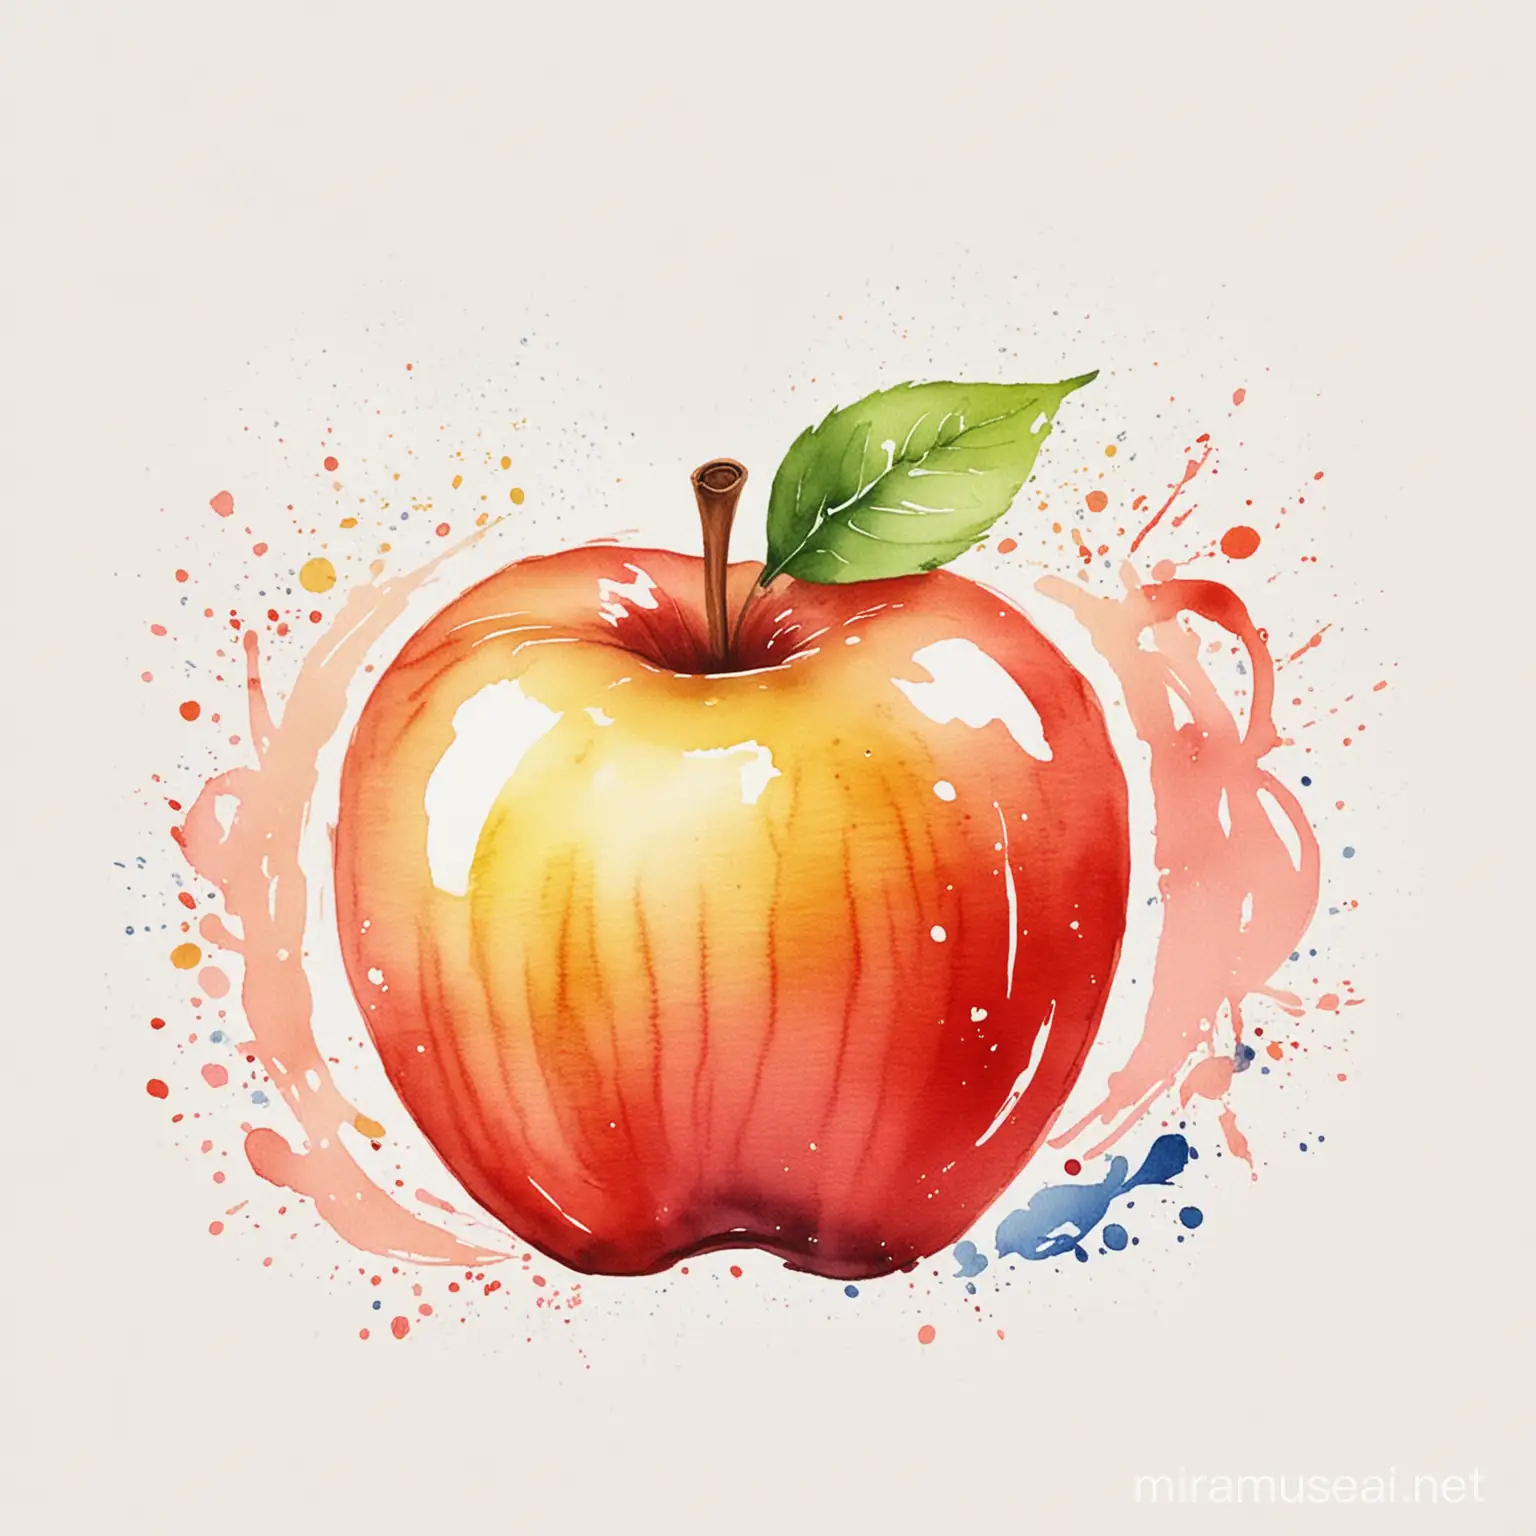 Teacher Appreciation Joyful Watercolor Tribute with Apple on White Background